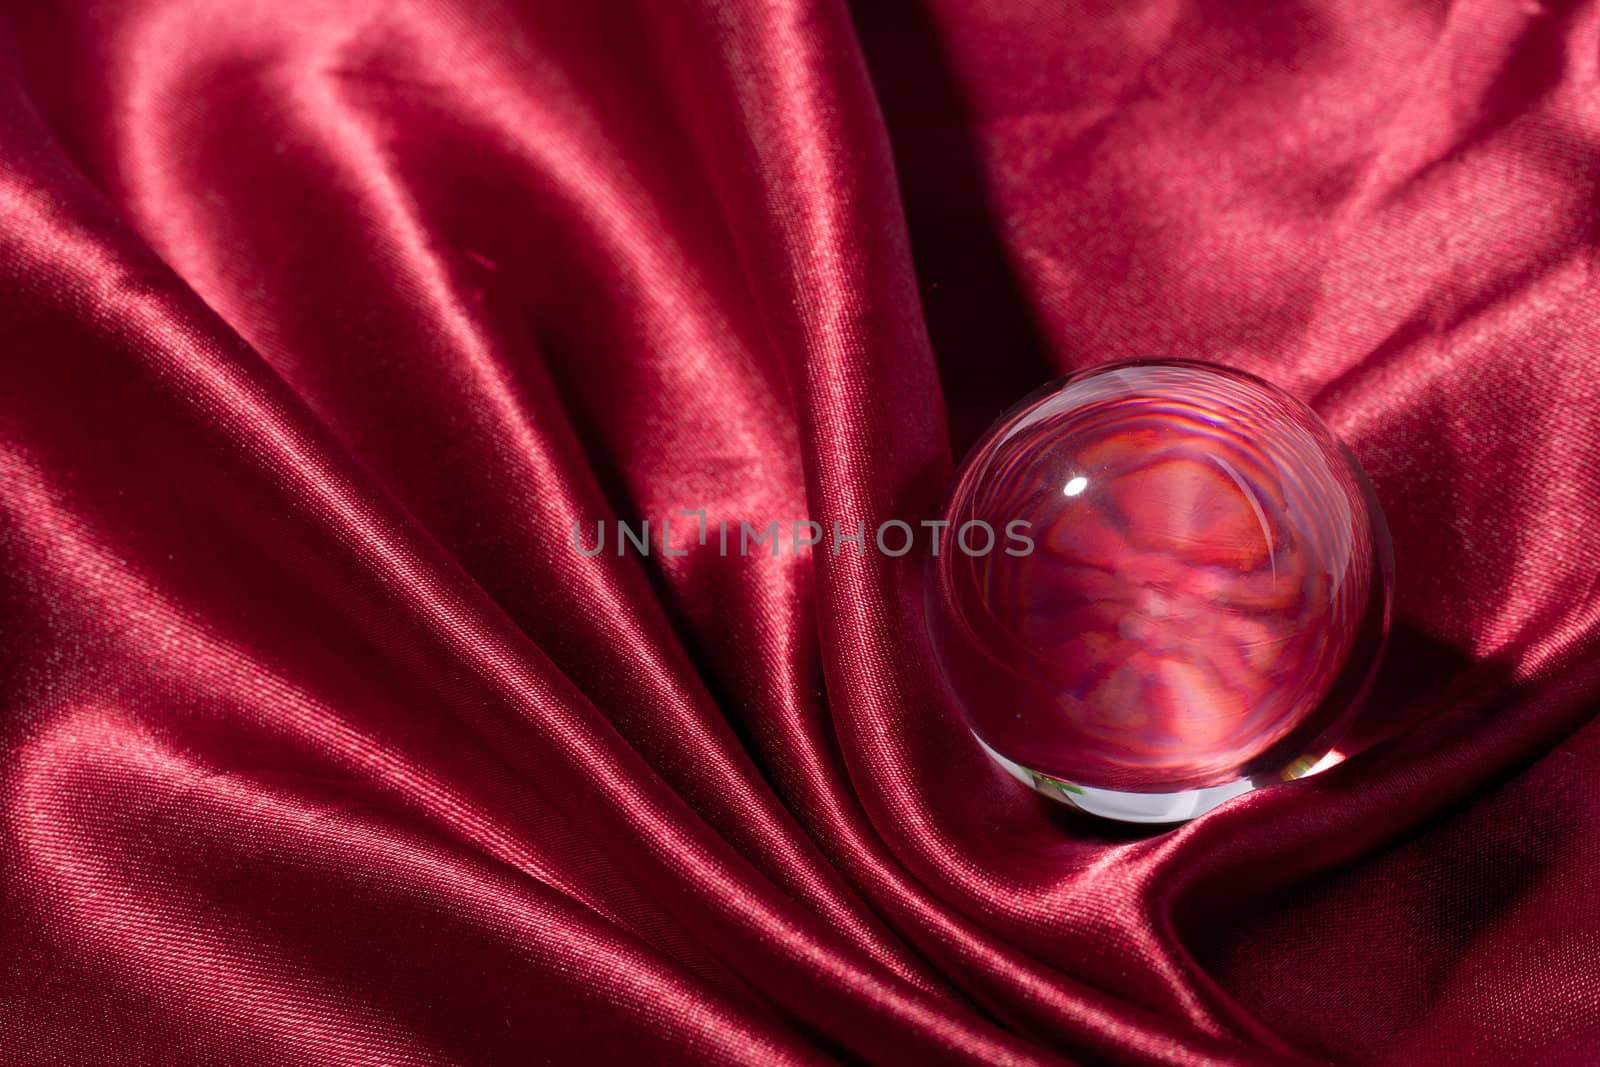 Red silk textile background by Suriyaphoto